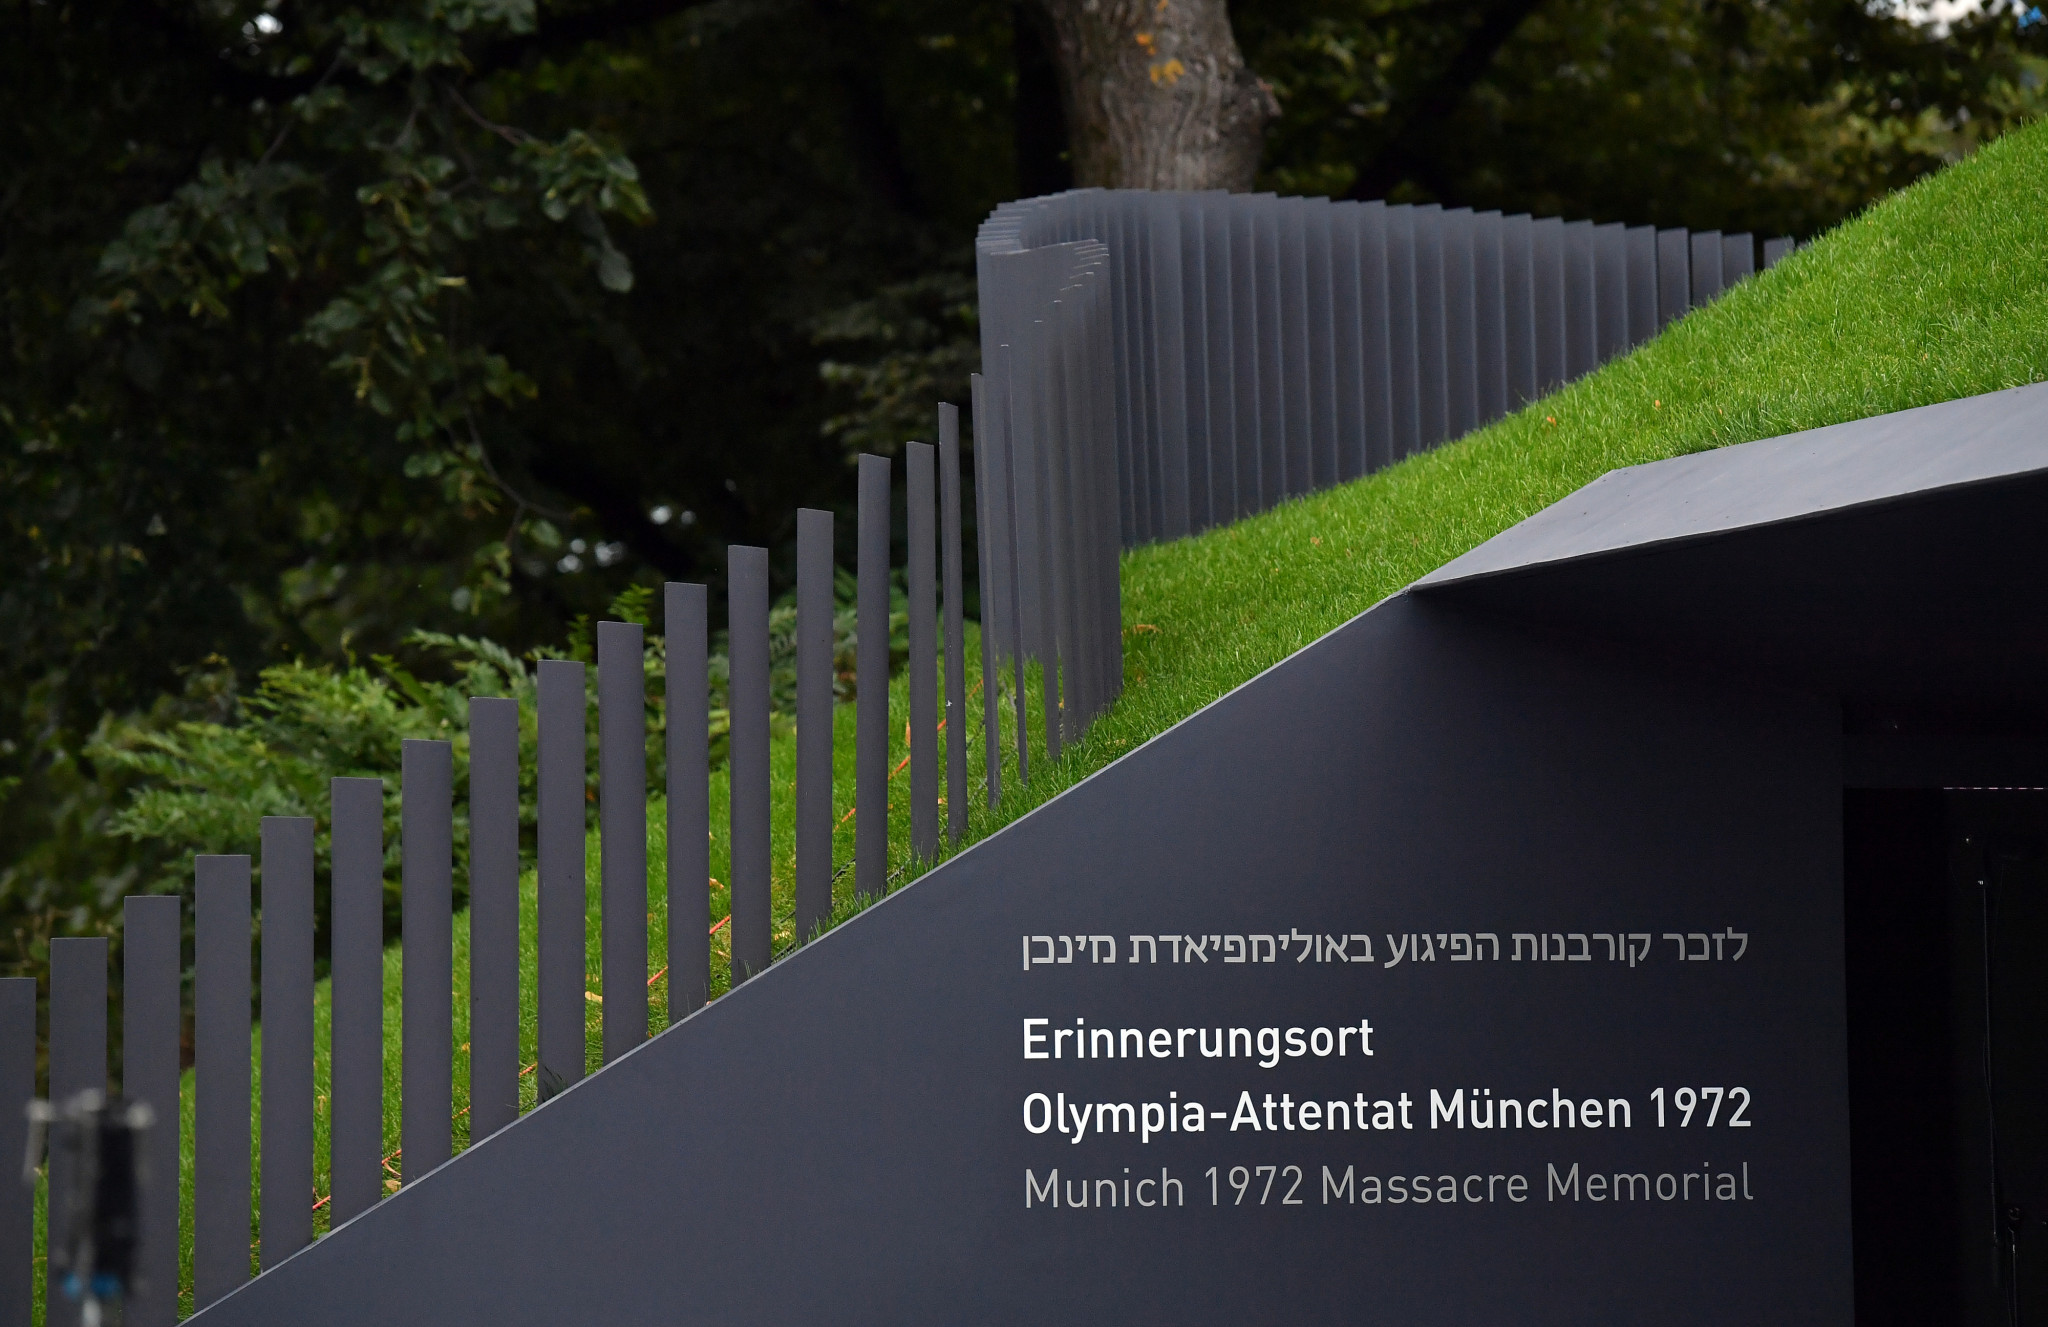 Bavarian authorities set to release all files on Munich Massacre